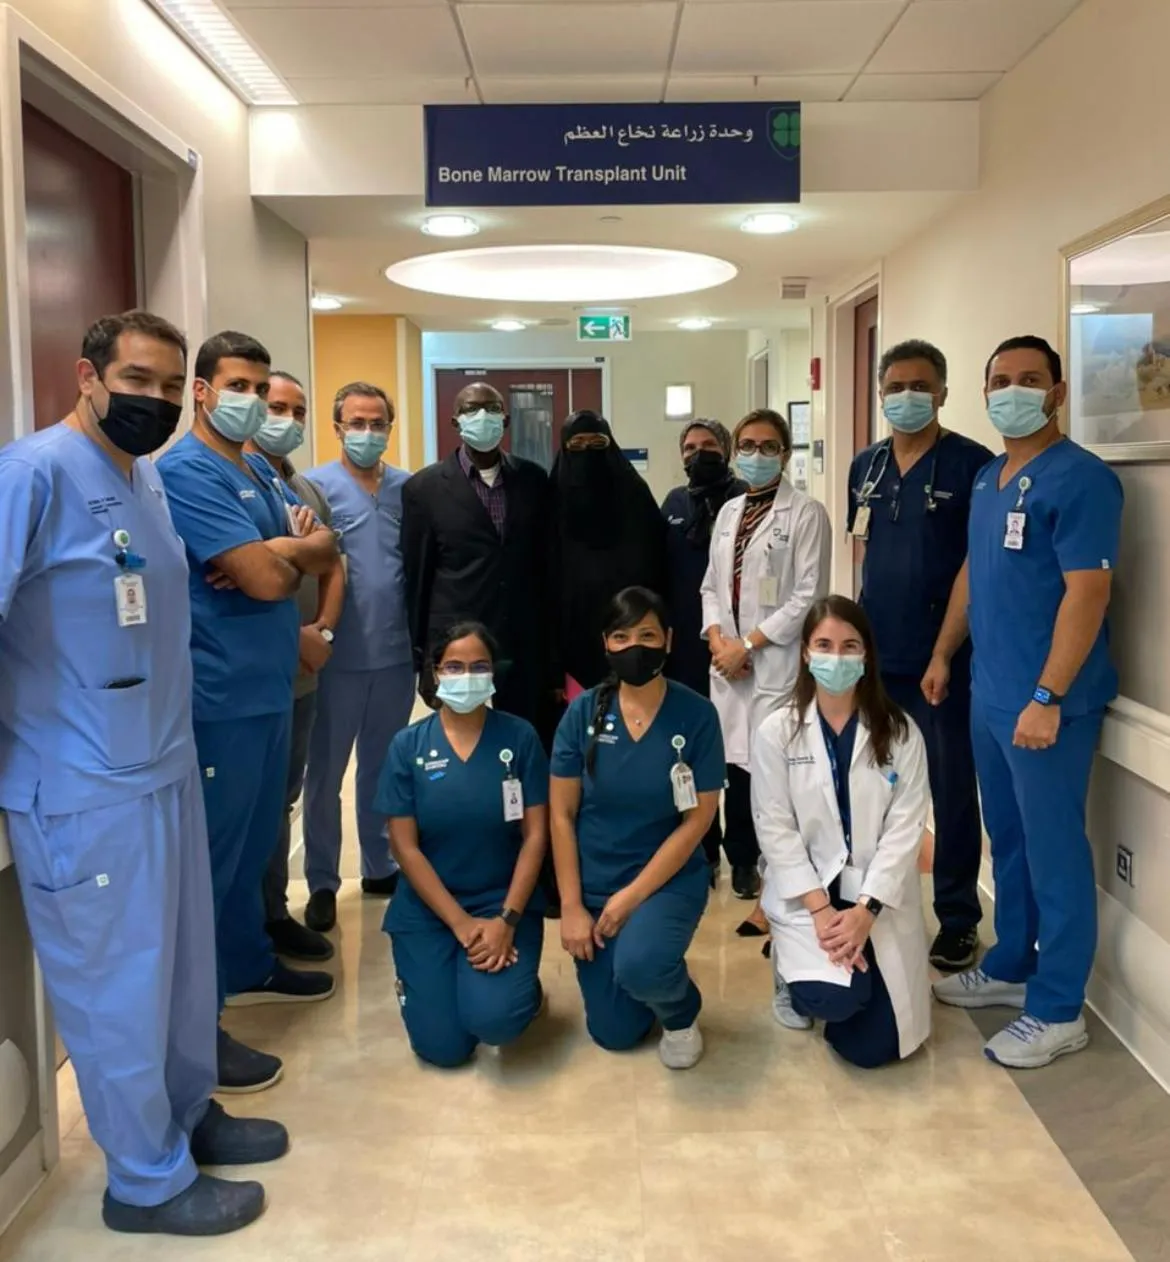 American Hospital Dubai performed the first bone marrow transplant procedure